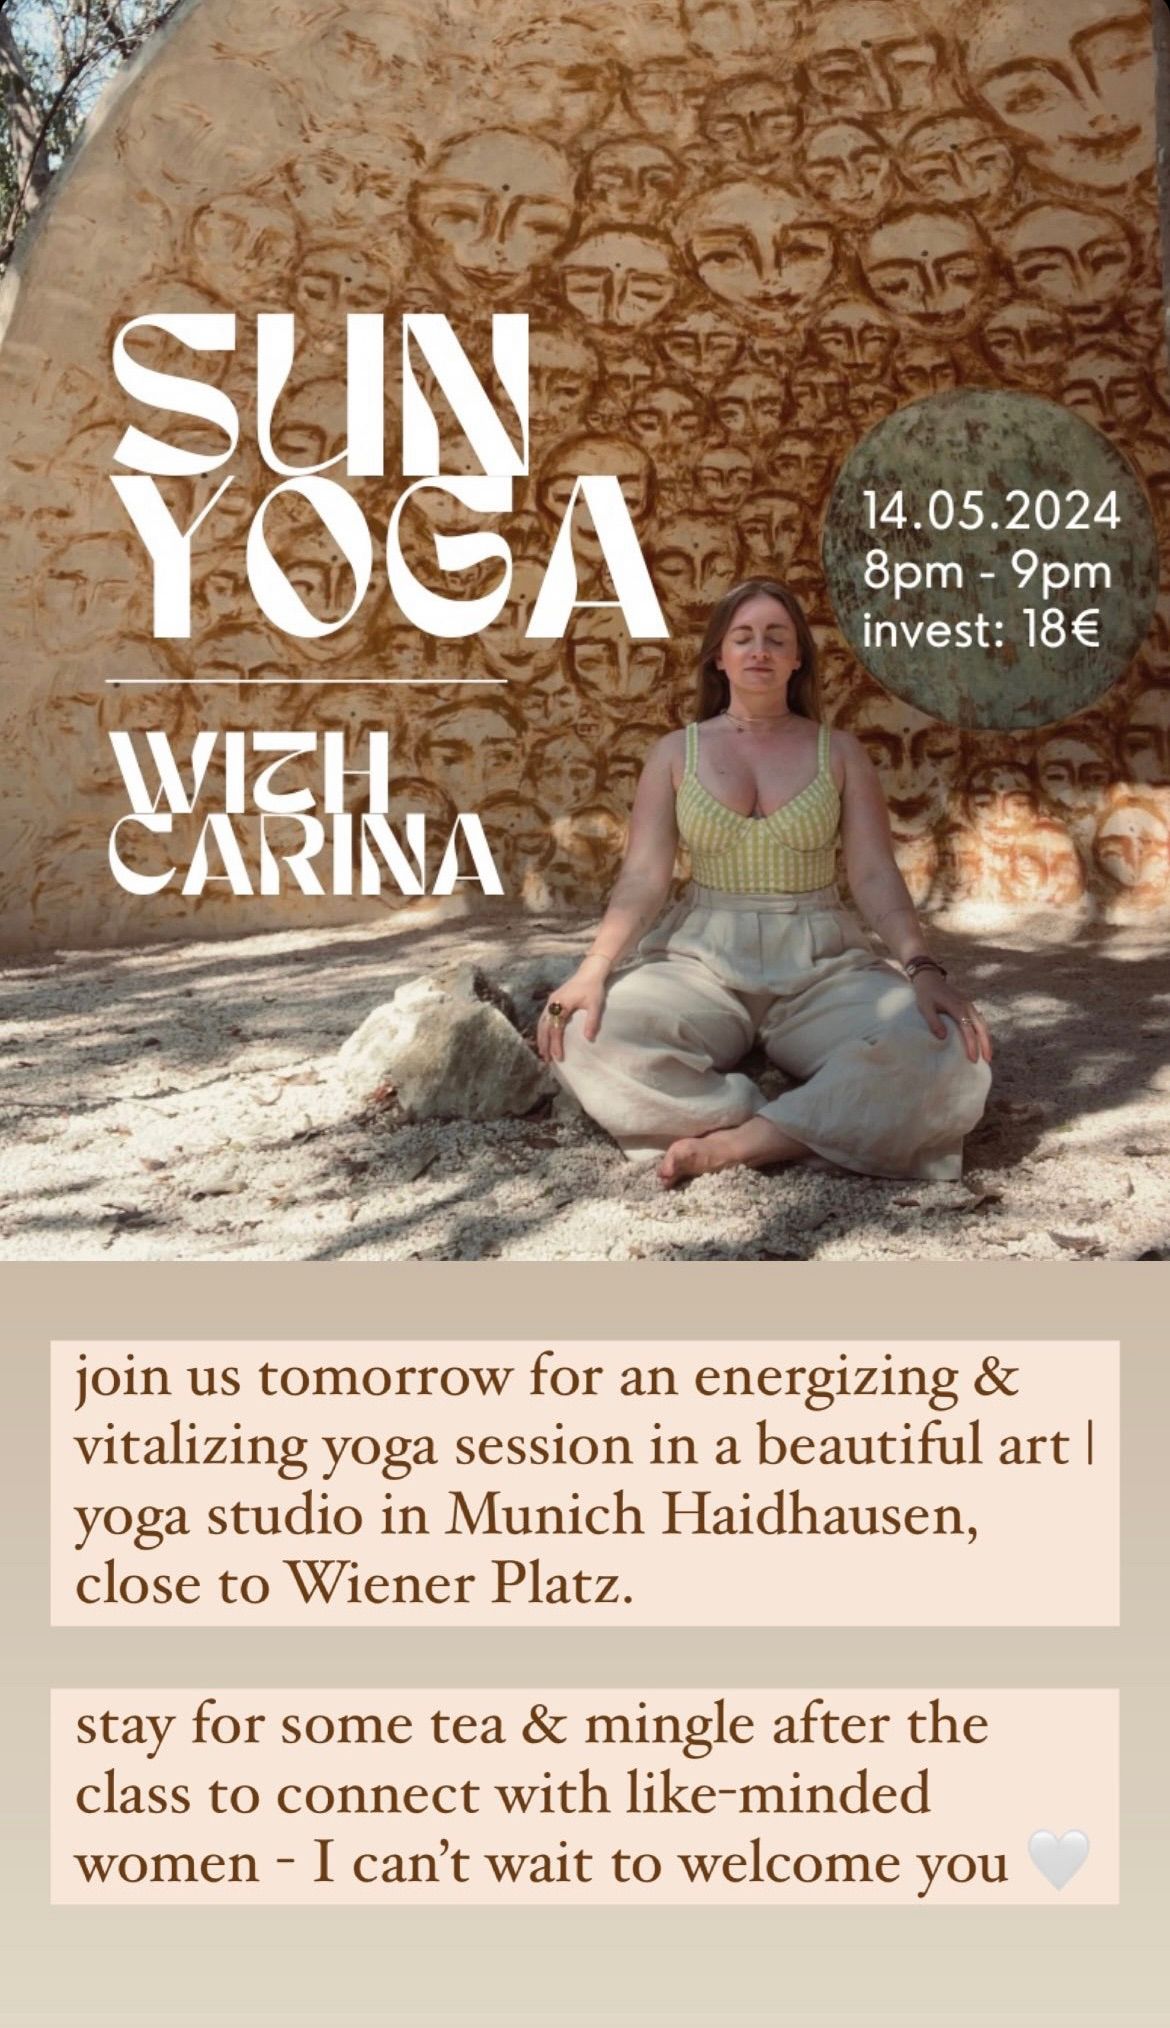 SUN yoga with Carina at Canela art studio, Canela art studio, Munich